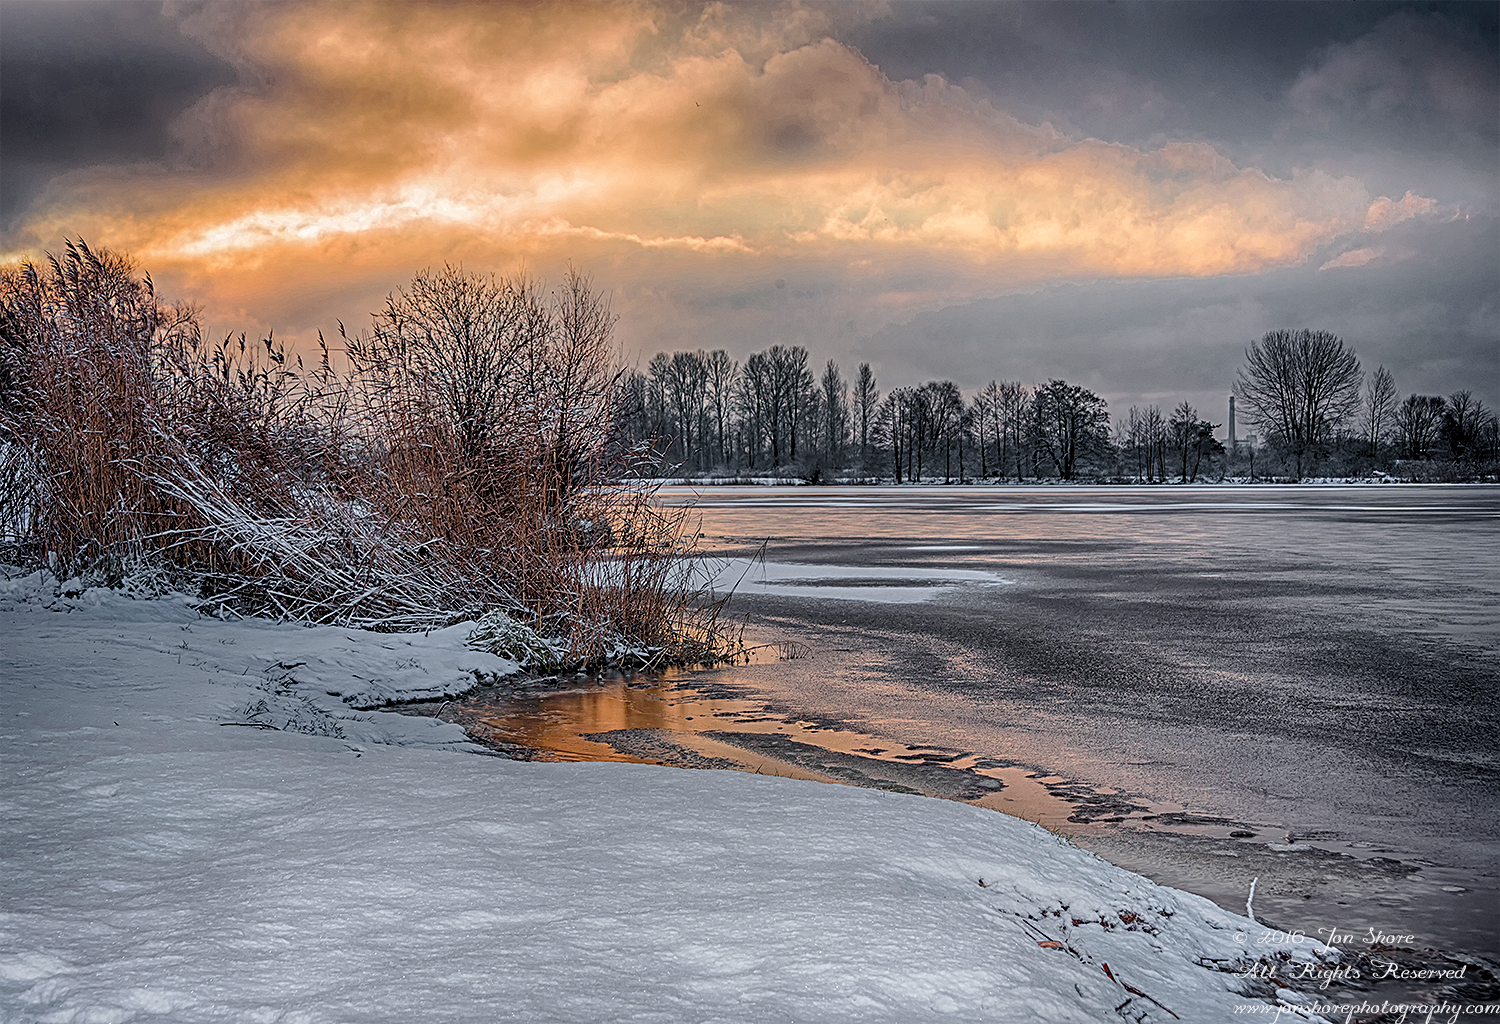 Morning on the Daugava River in Winter. Nikkor 50mm